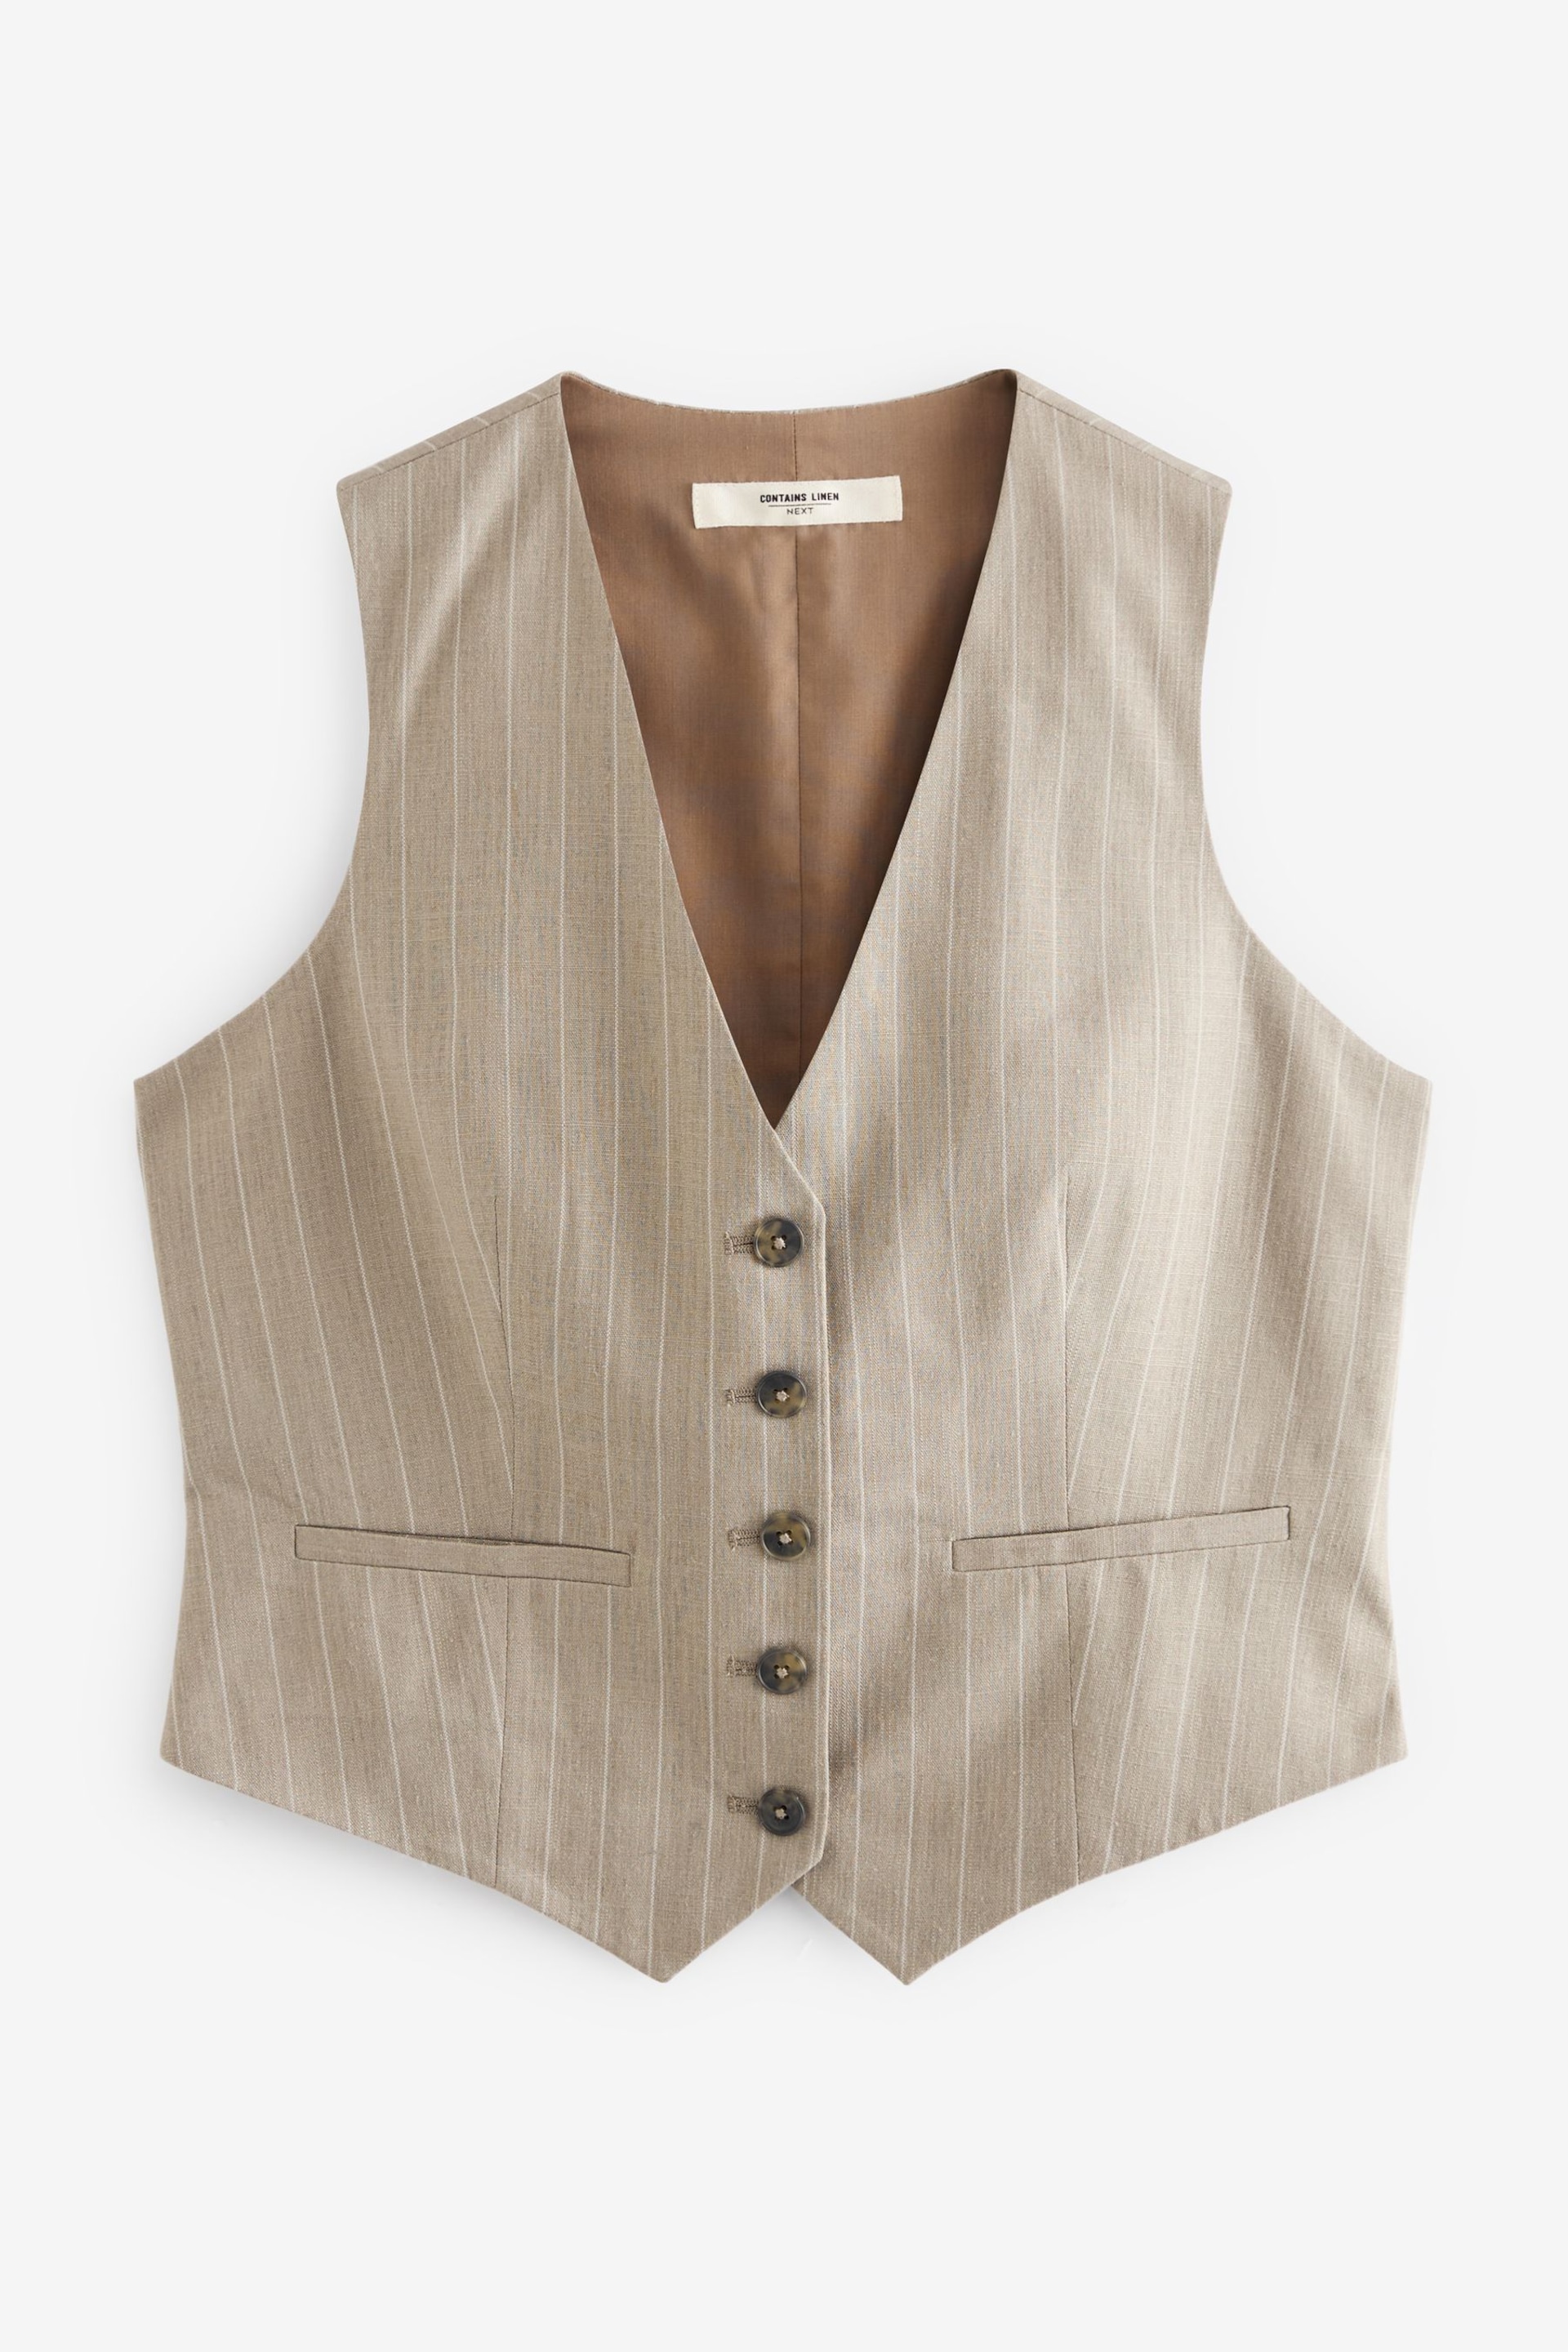 Mink Brown Striped Linen Waistcoat - Image 5 of 6